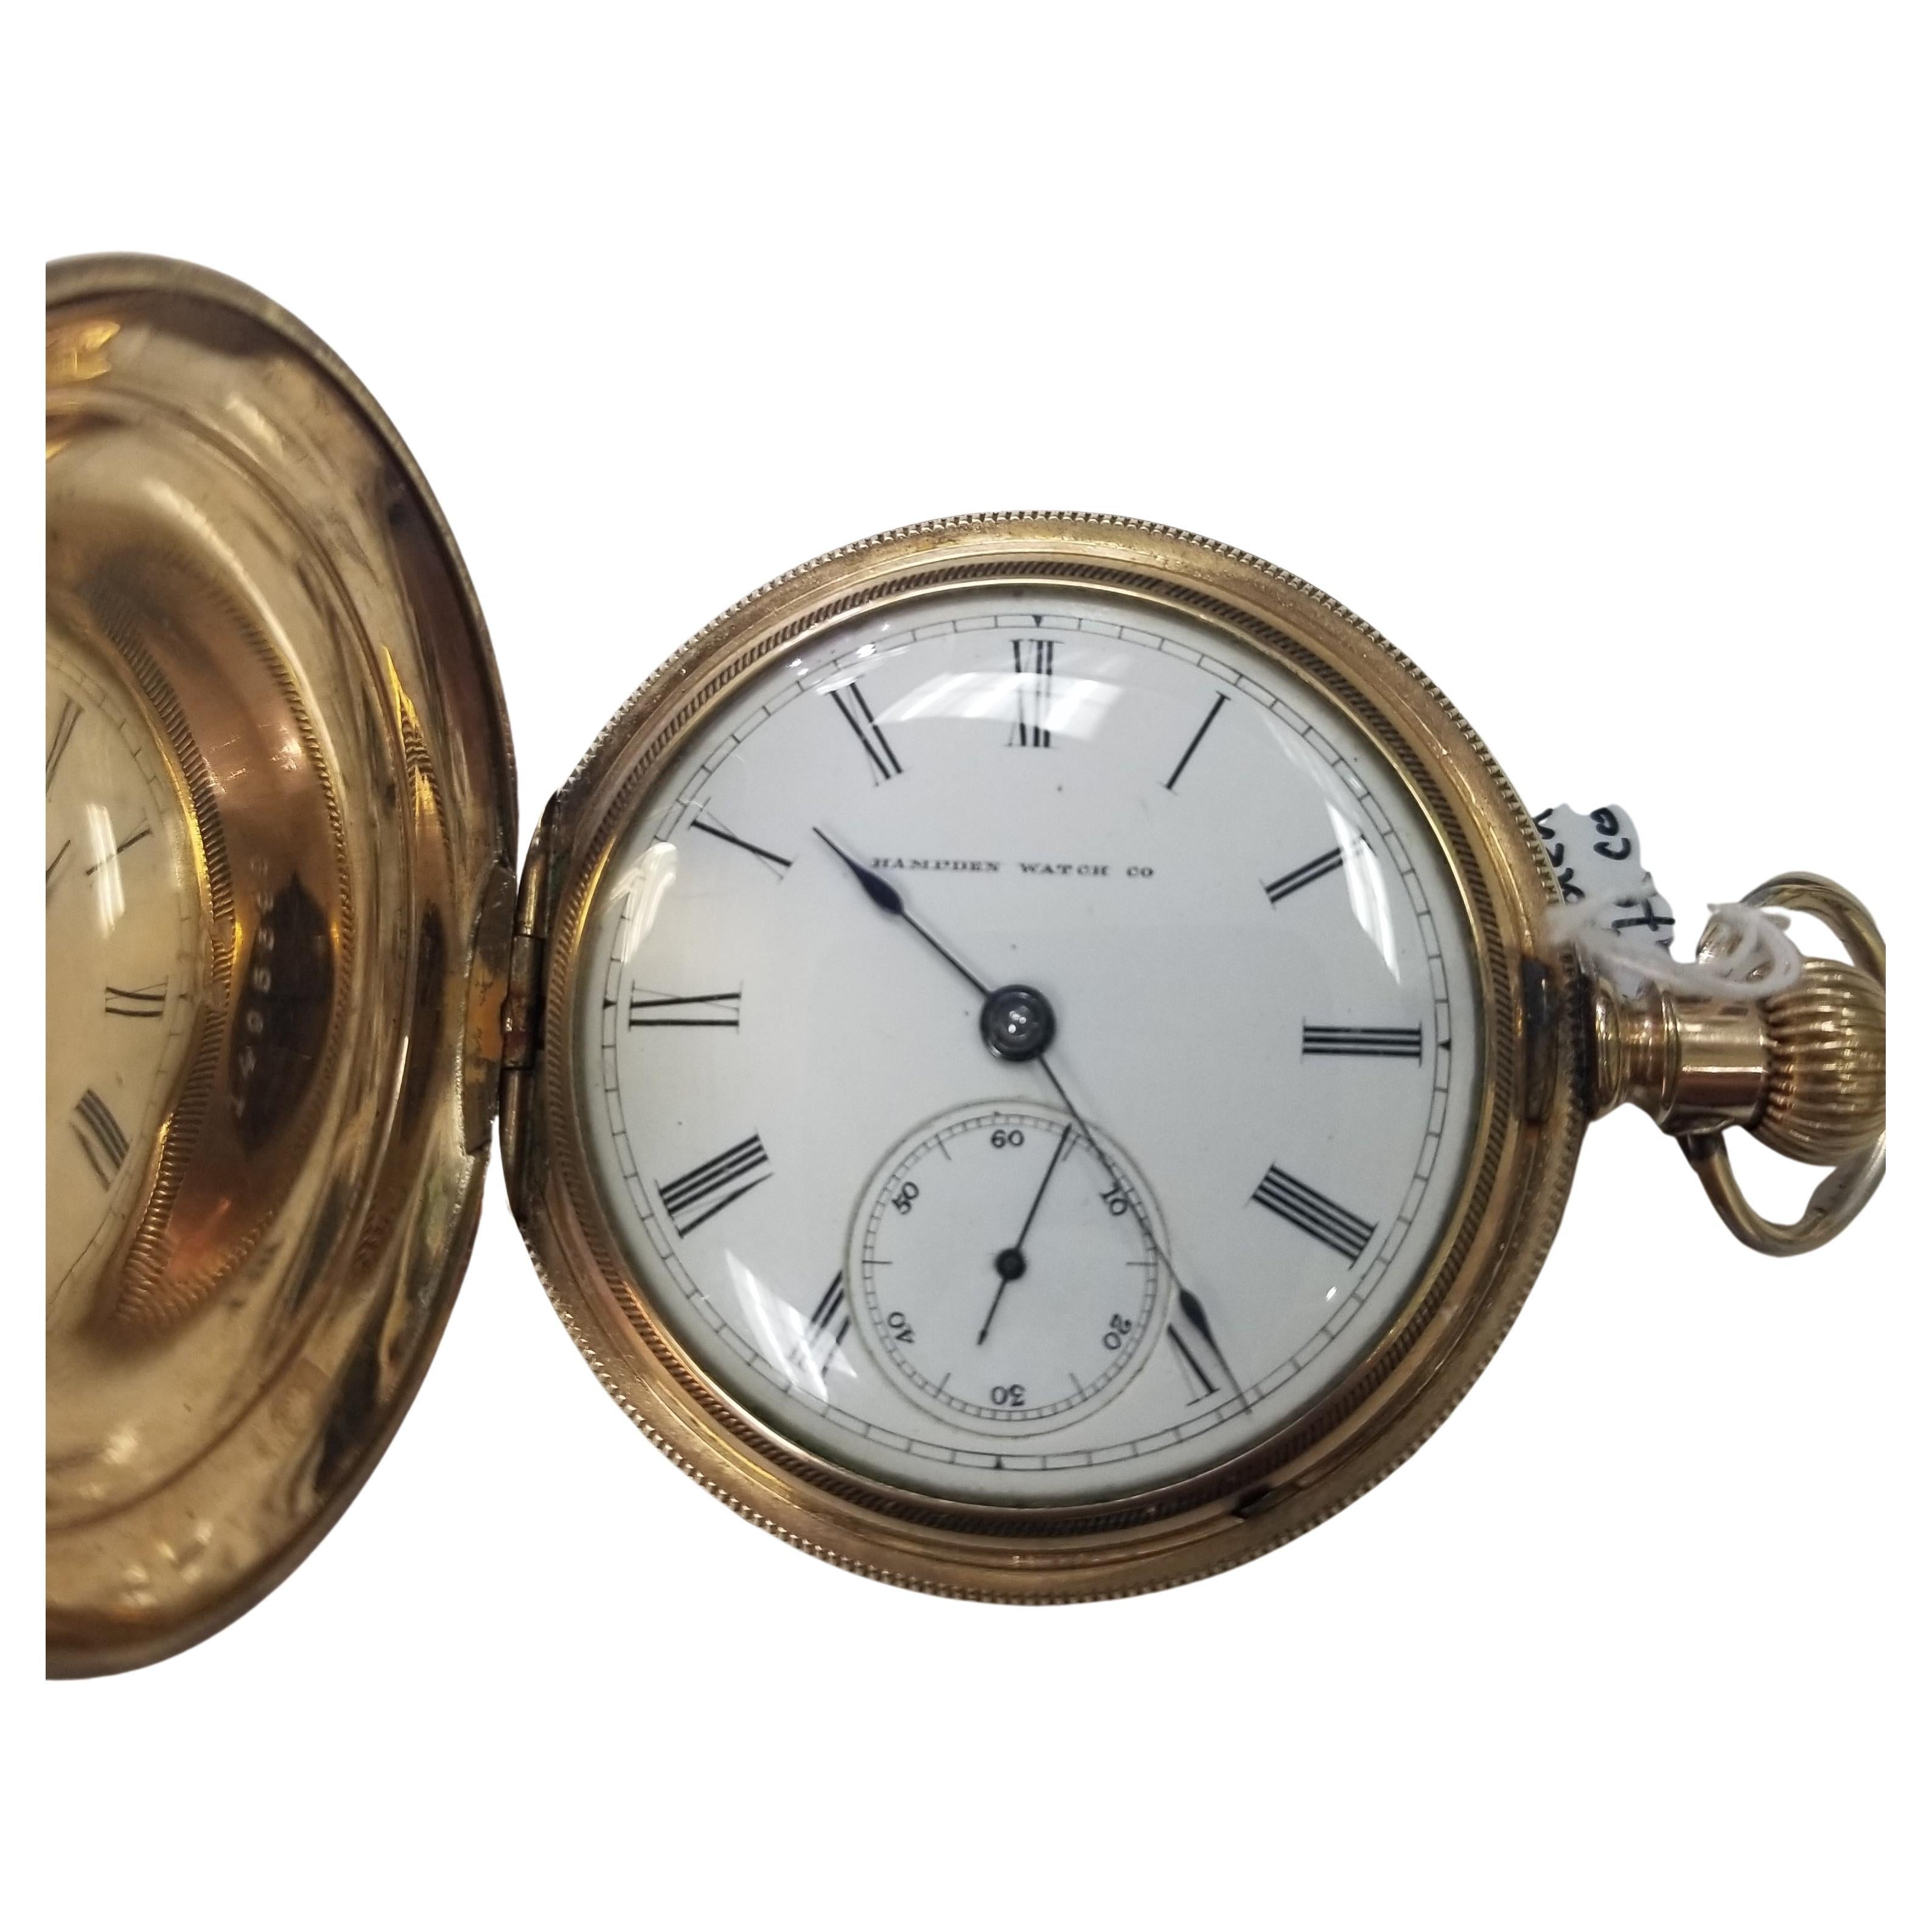 Hampden Watch Co. Vergoldetes weißes Zifferblatt 1900-1909